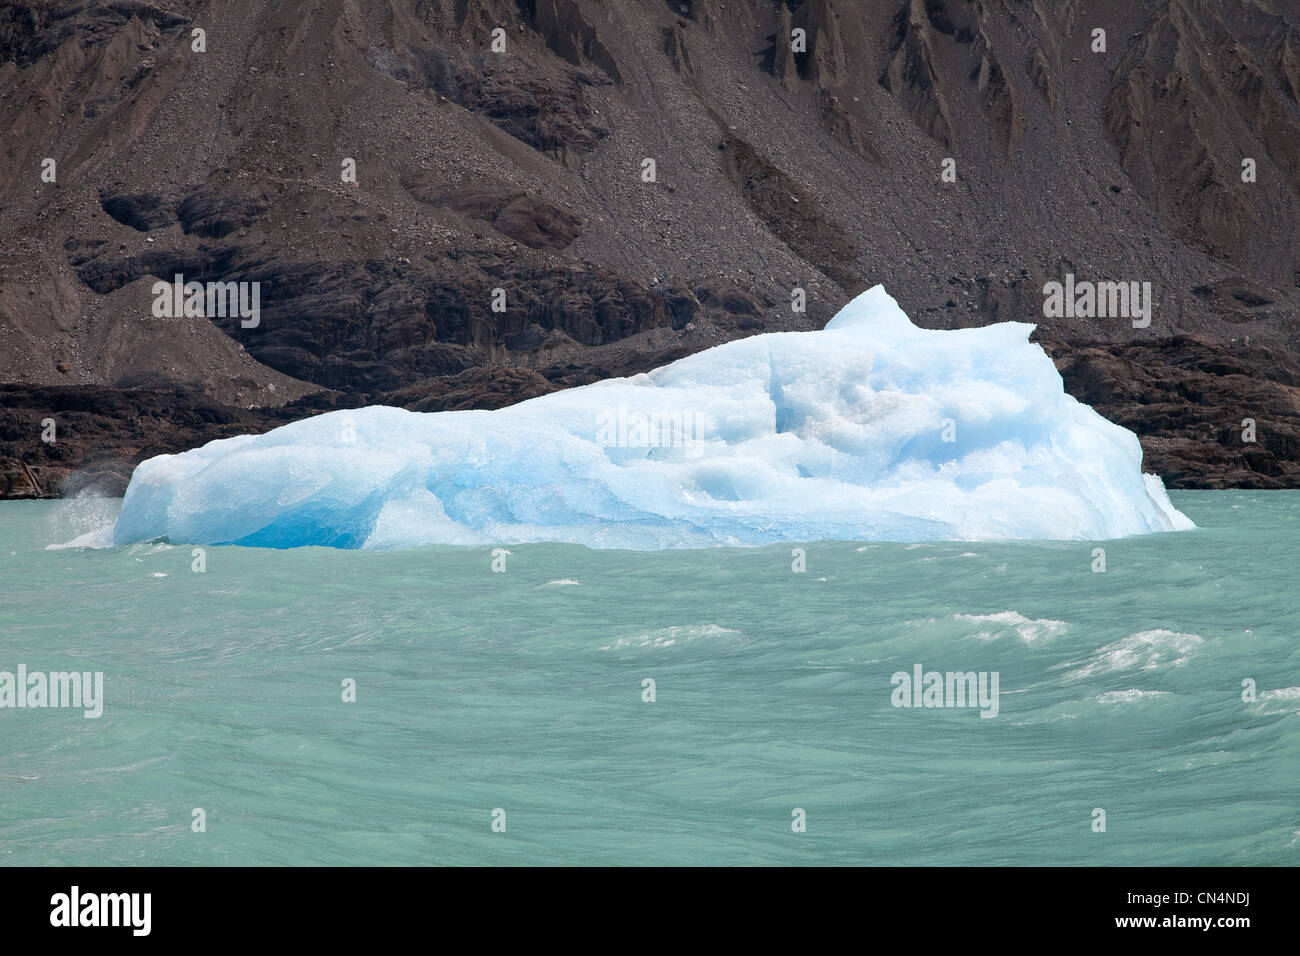 Chile, Patagonia, Aisen region, Capitan Prat province, iceberg on O'Higgins lake Stock Photo